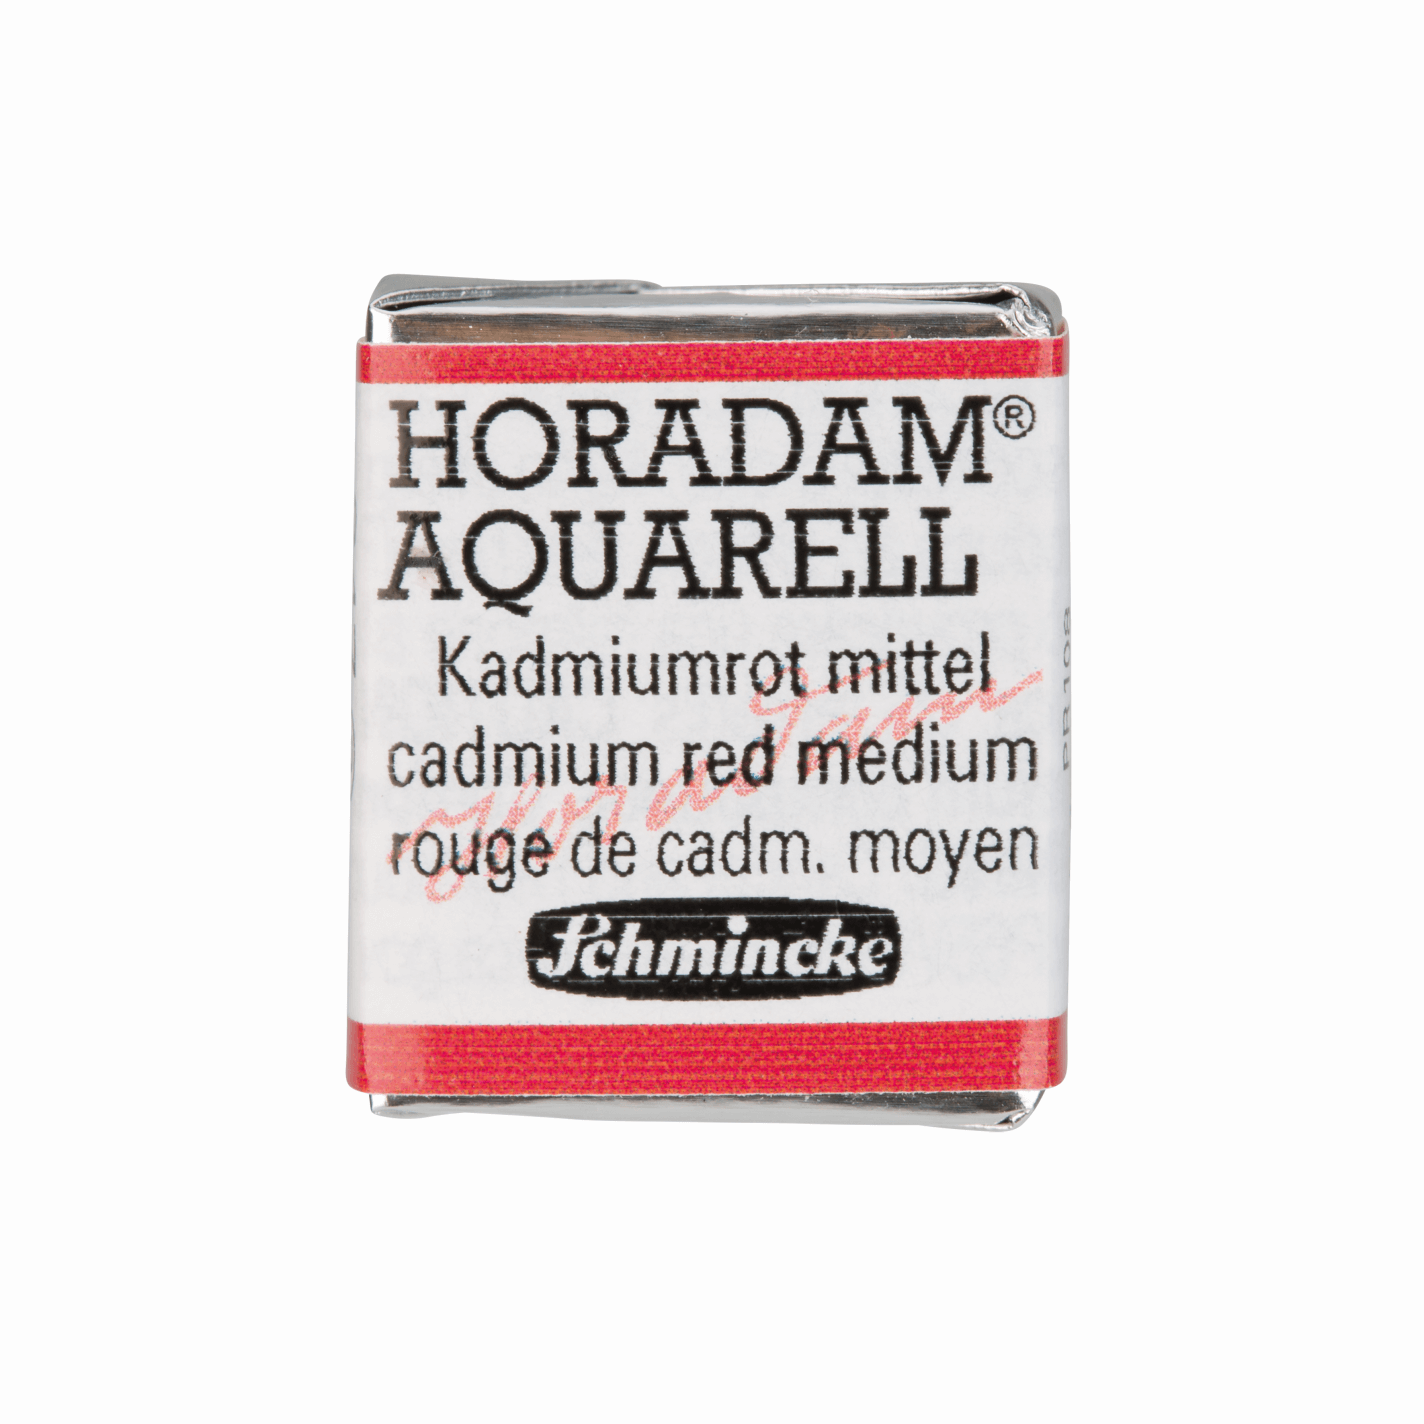 Schmincke Horadam Aquarell pans 1/2 pan Cadmium Red Medium